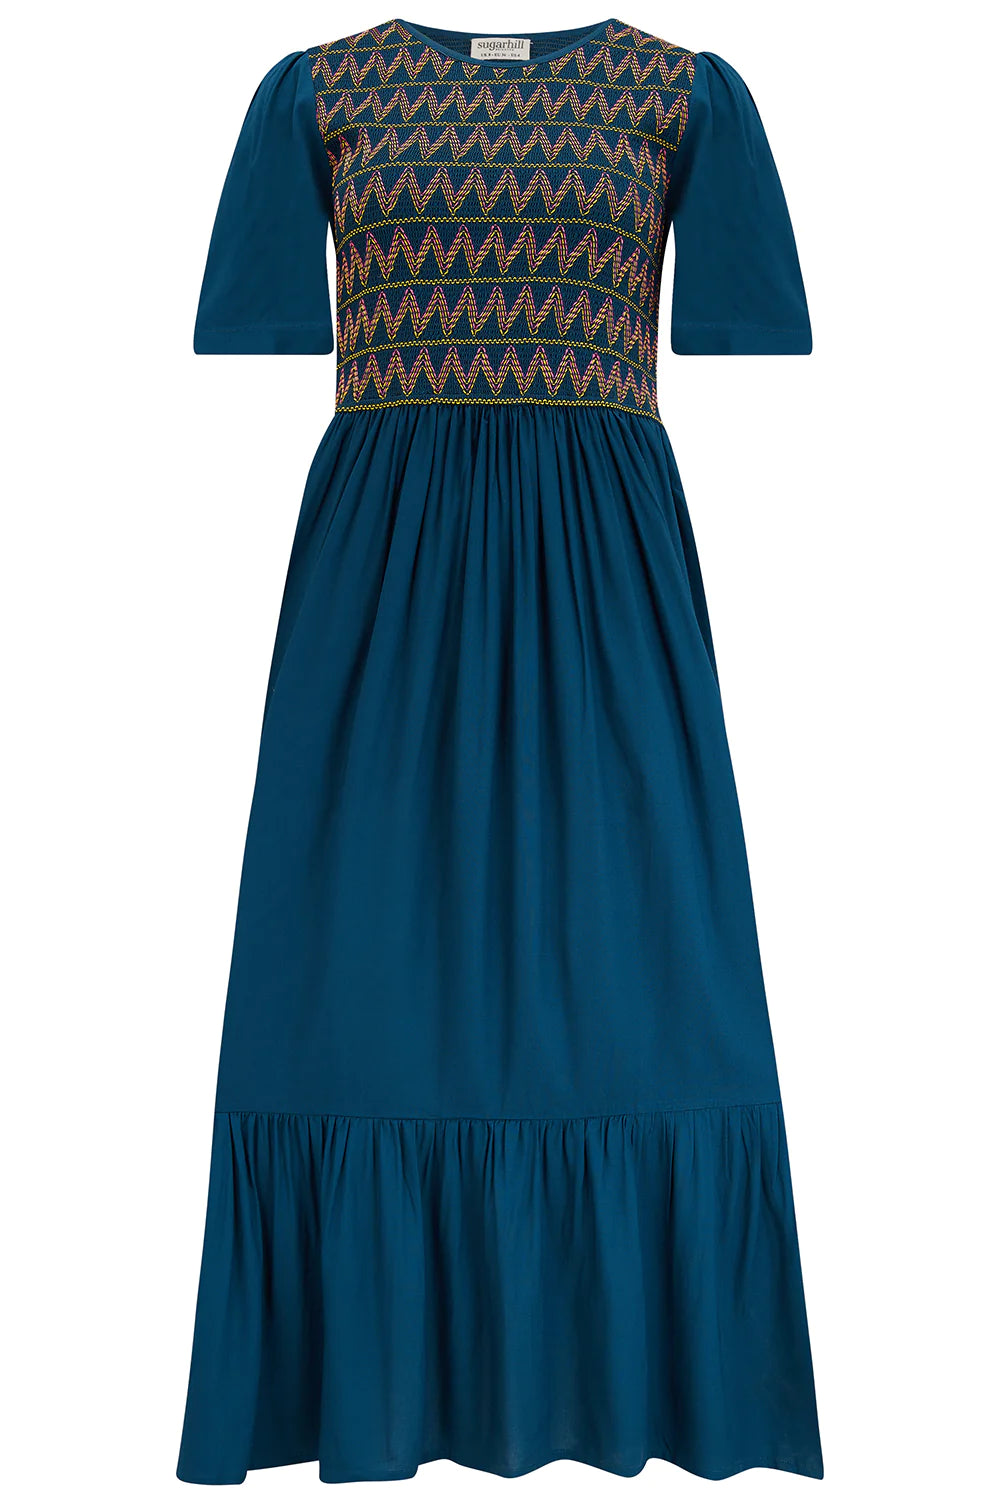 Sugarhill Brighton Brielle Midi Shirred Dress - Washed Navy, Zigzag Shirring